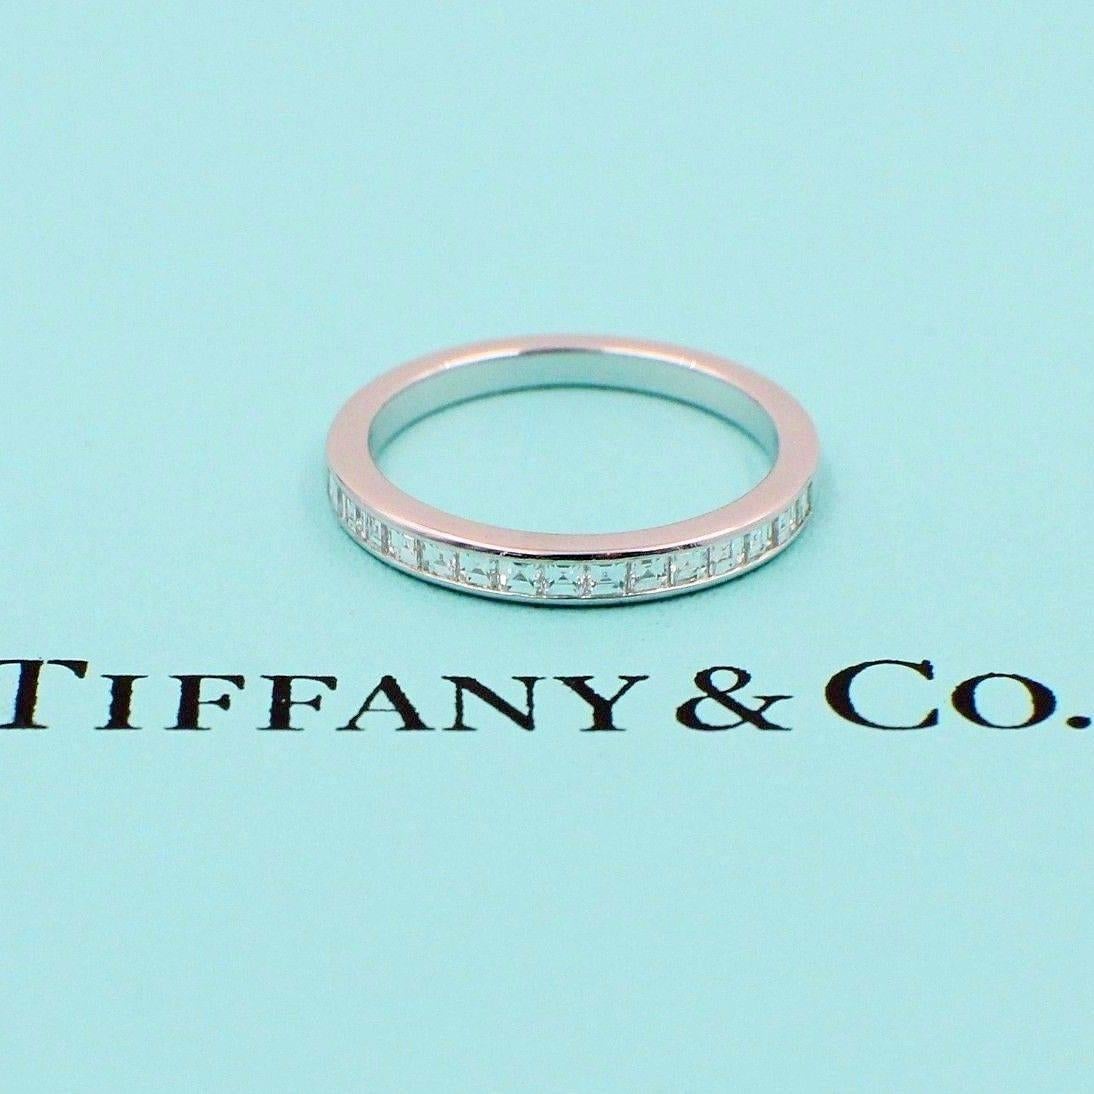 Tiffany & Co.
Style:  Princess cut Diamond Half Circle Band
Sku:  22613162
Metal:  Platinum PT950
Size:  5.5
Width:  2.6 MM
Total Carat Weight:  0.39 TCW
Diamond Shape:  Round Brilliant Diamonds 0.39 TCW
Diamond Color & Clarity:  F - G /